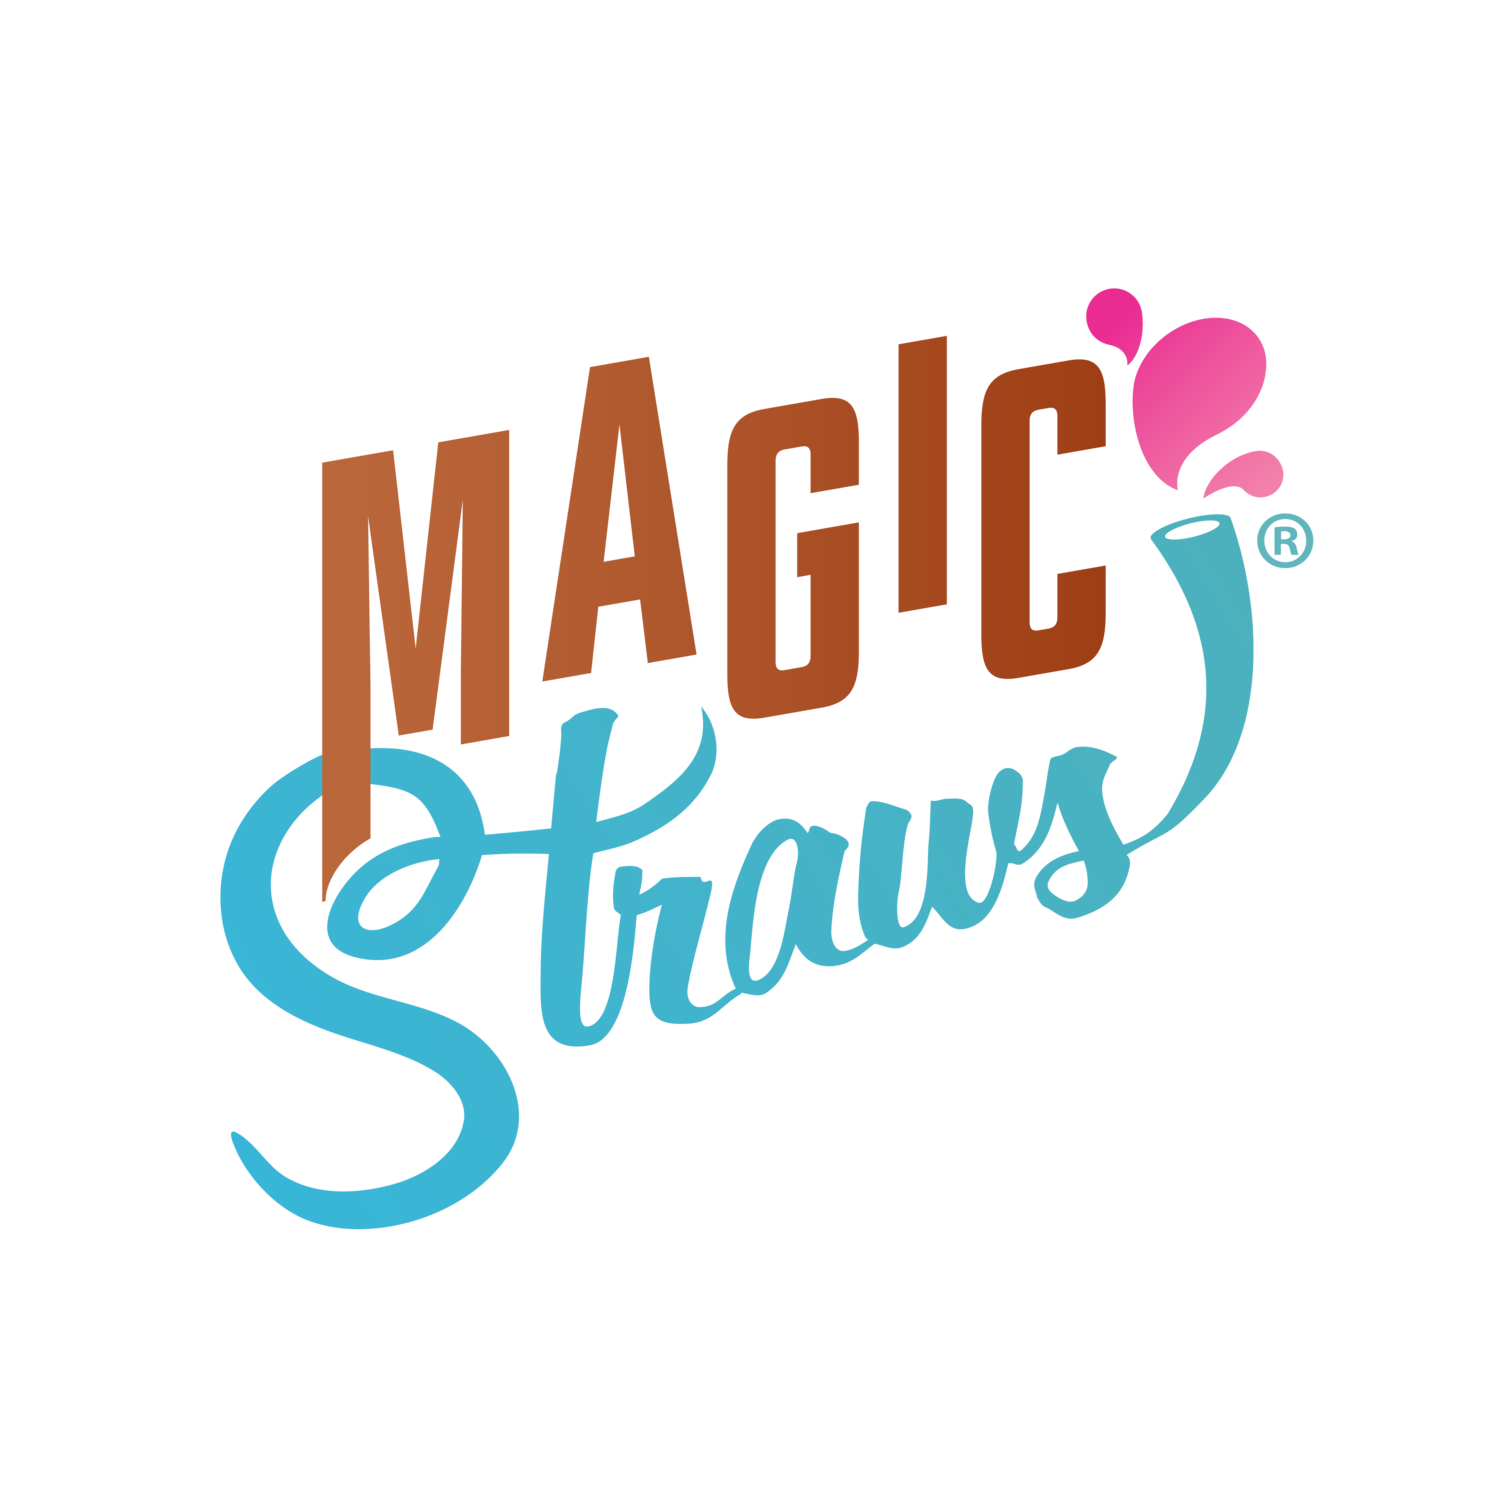 Magic Straws